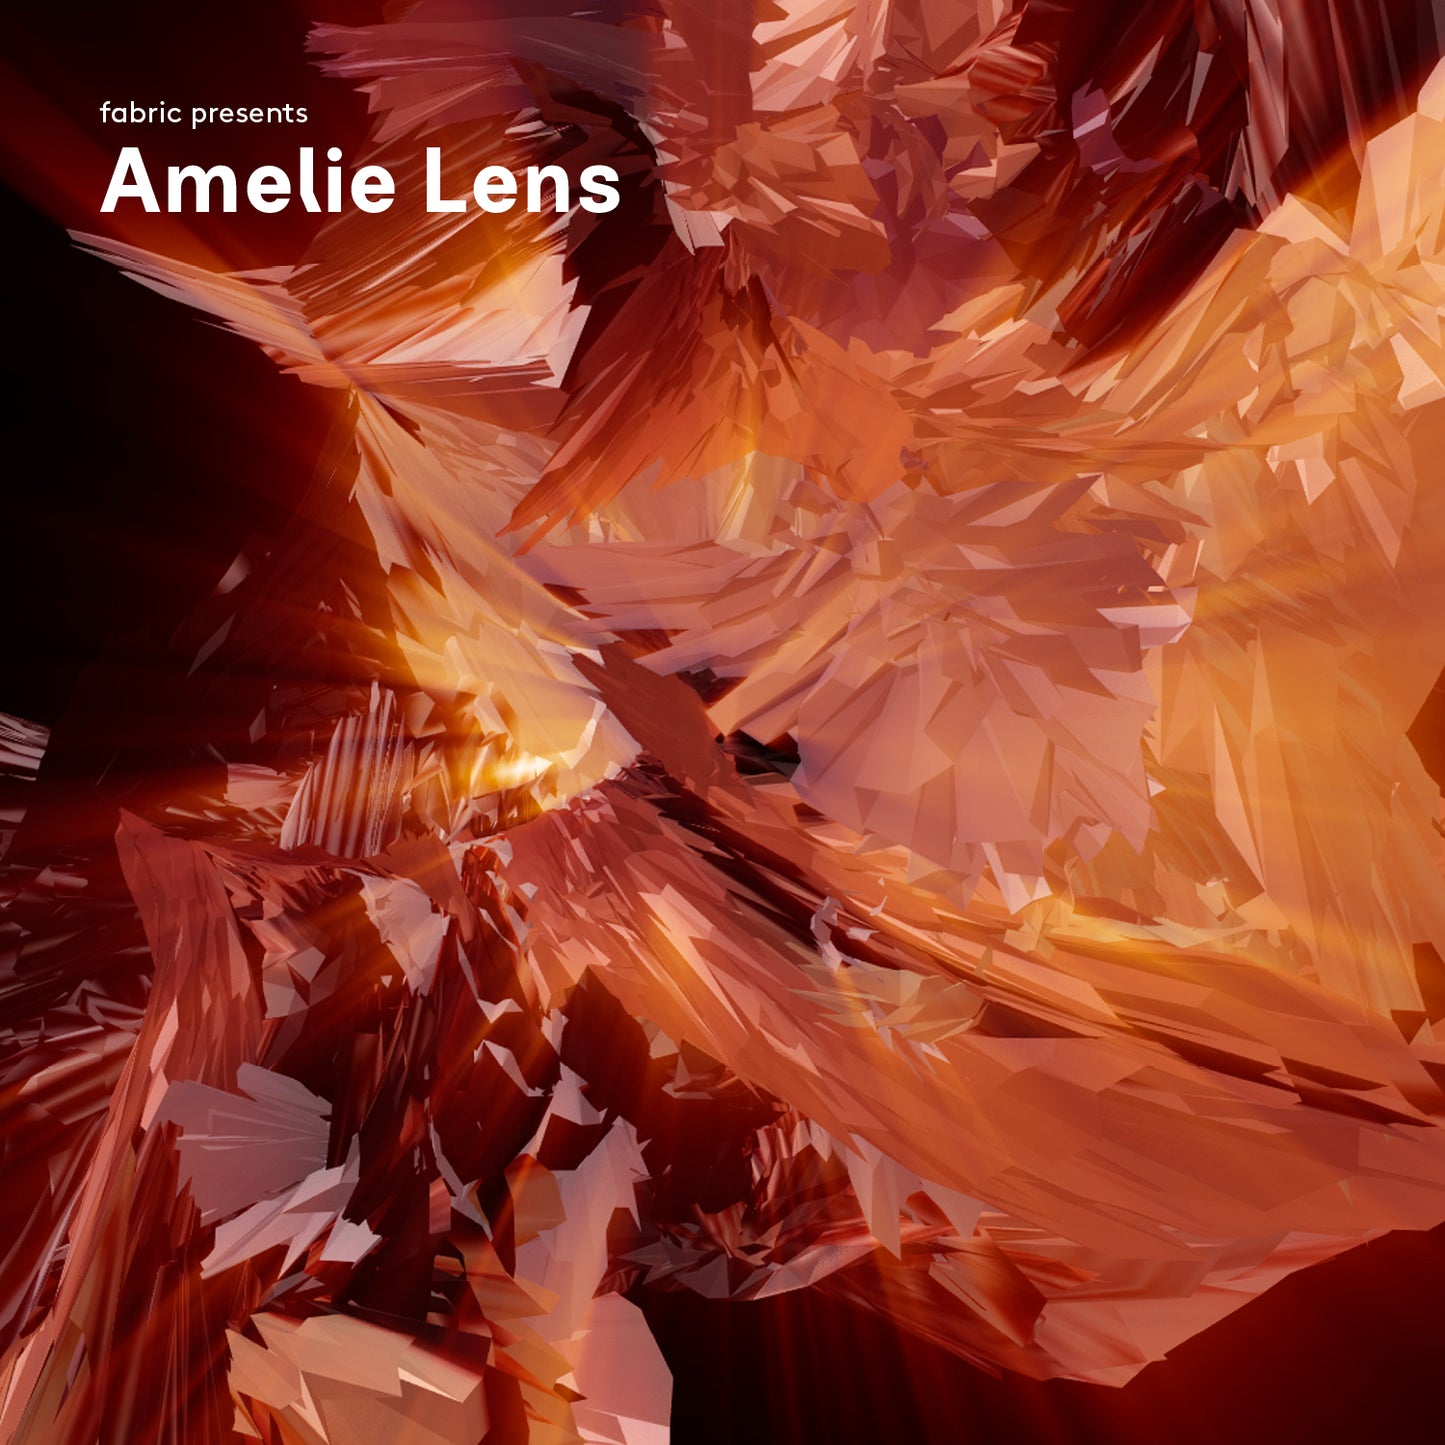 fabric presents Amelie Lens Vinyl Tracks And Mix